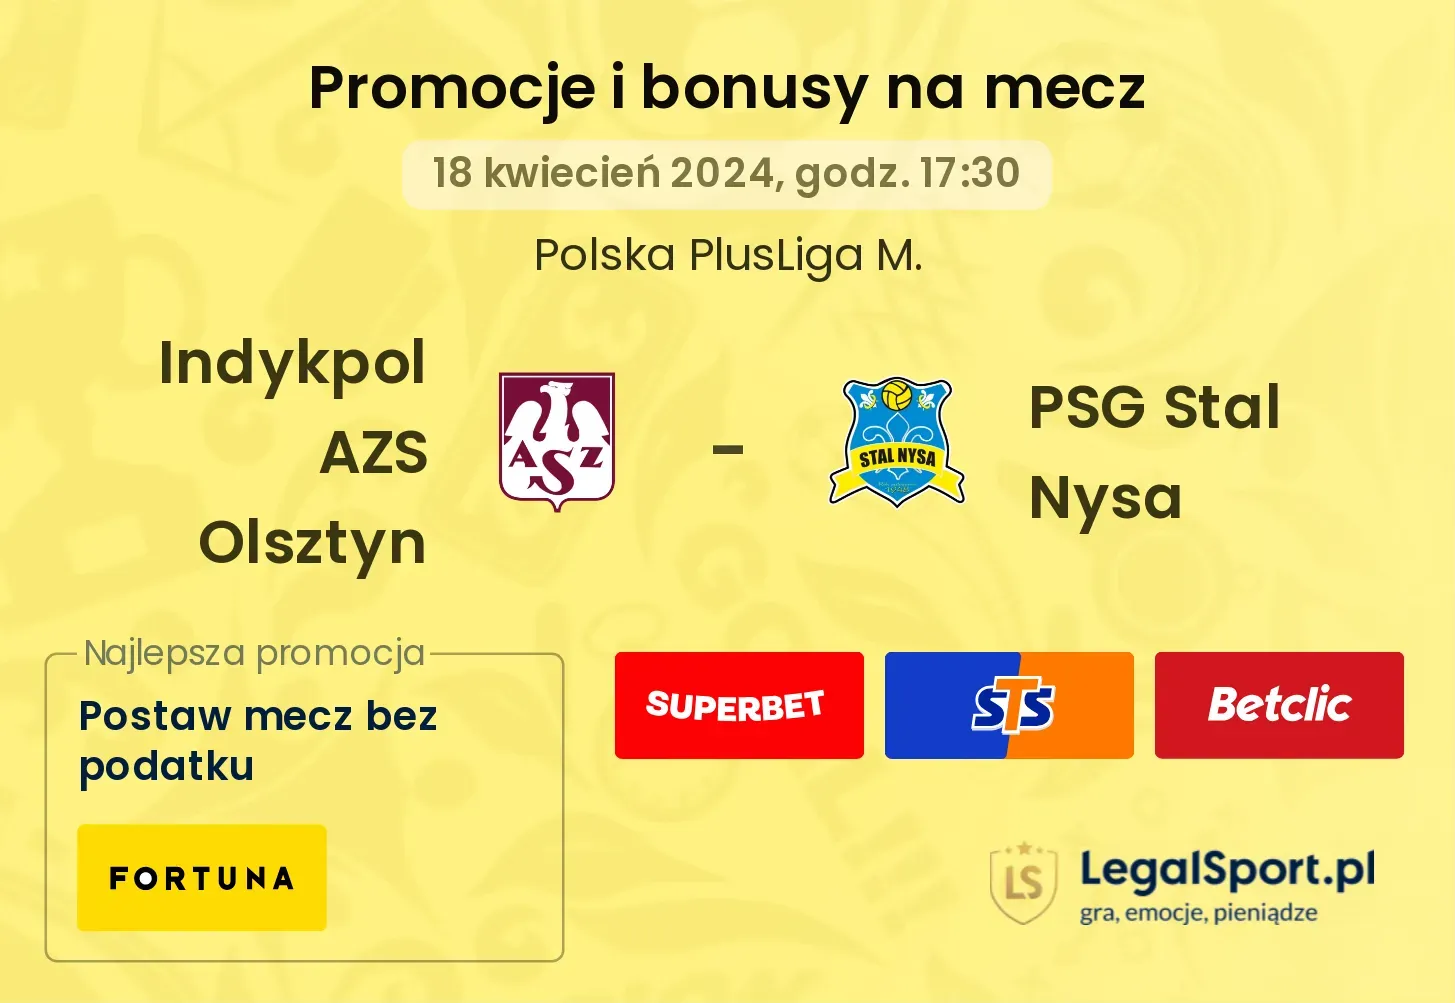 Indykpol AZS Olsztyn - PSG Stal Nysa promocje bonusy na mecz